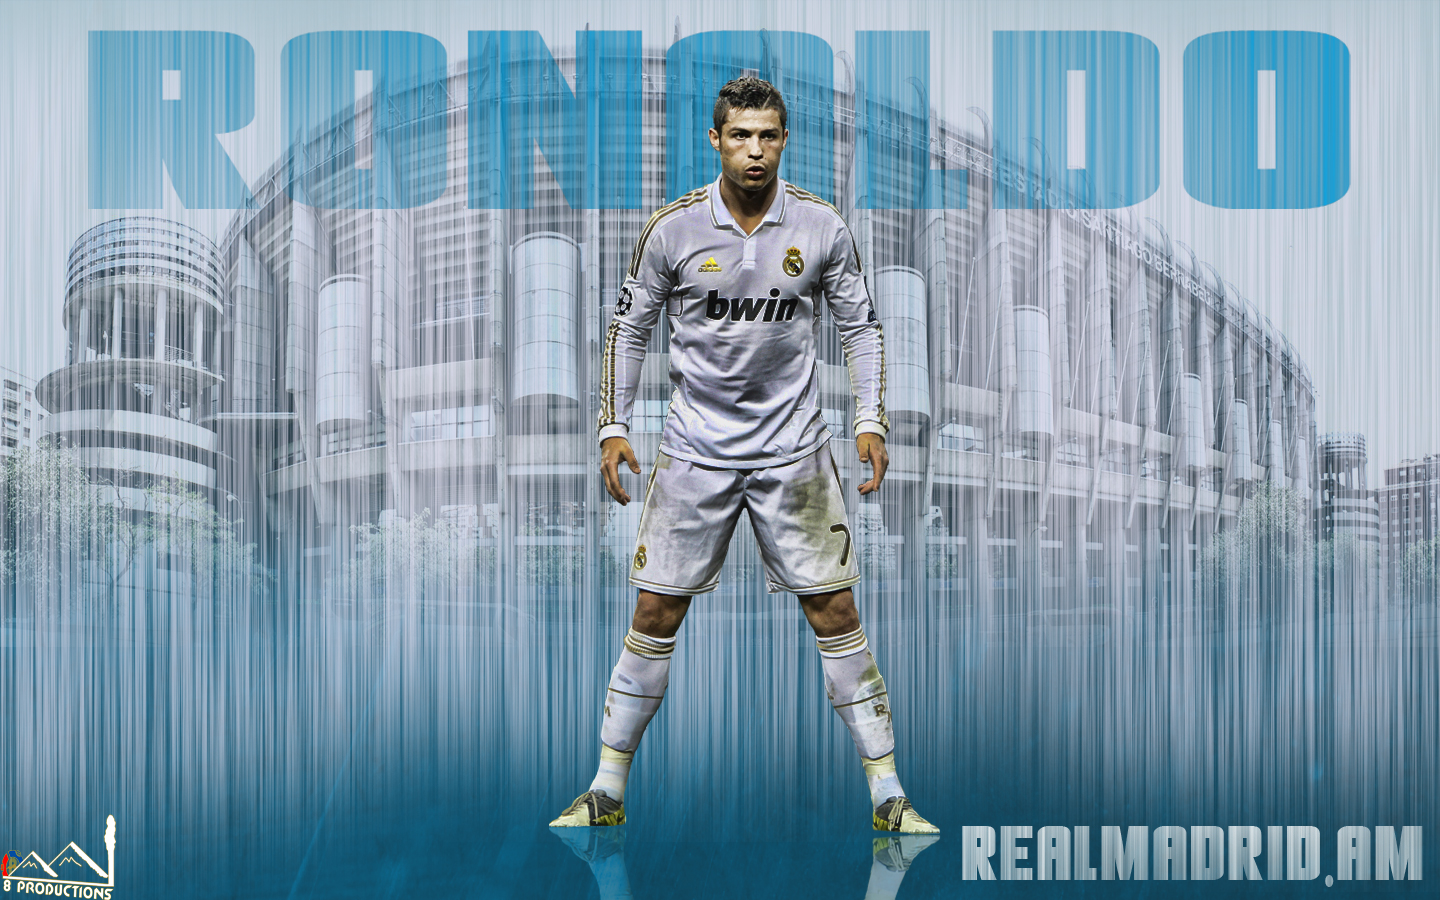 http://1.bp.blogspot.com/-z14vxKV5WQA/UBELOBoAwCI/AAAAAAAADE0/P_HV308SUlo/s1600/Cristiano-Ronaldo-Real-Madrid.jpg